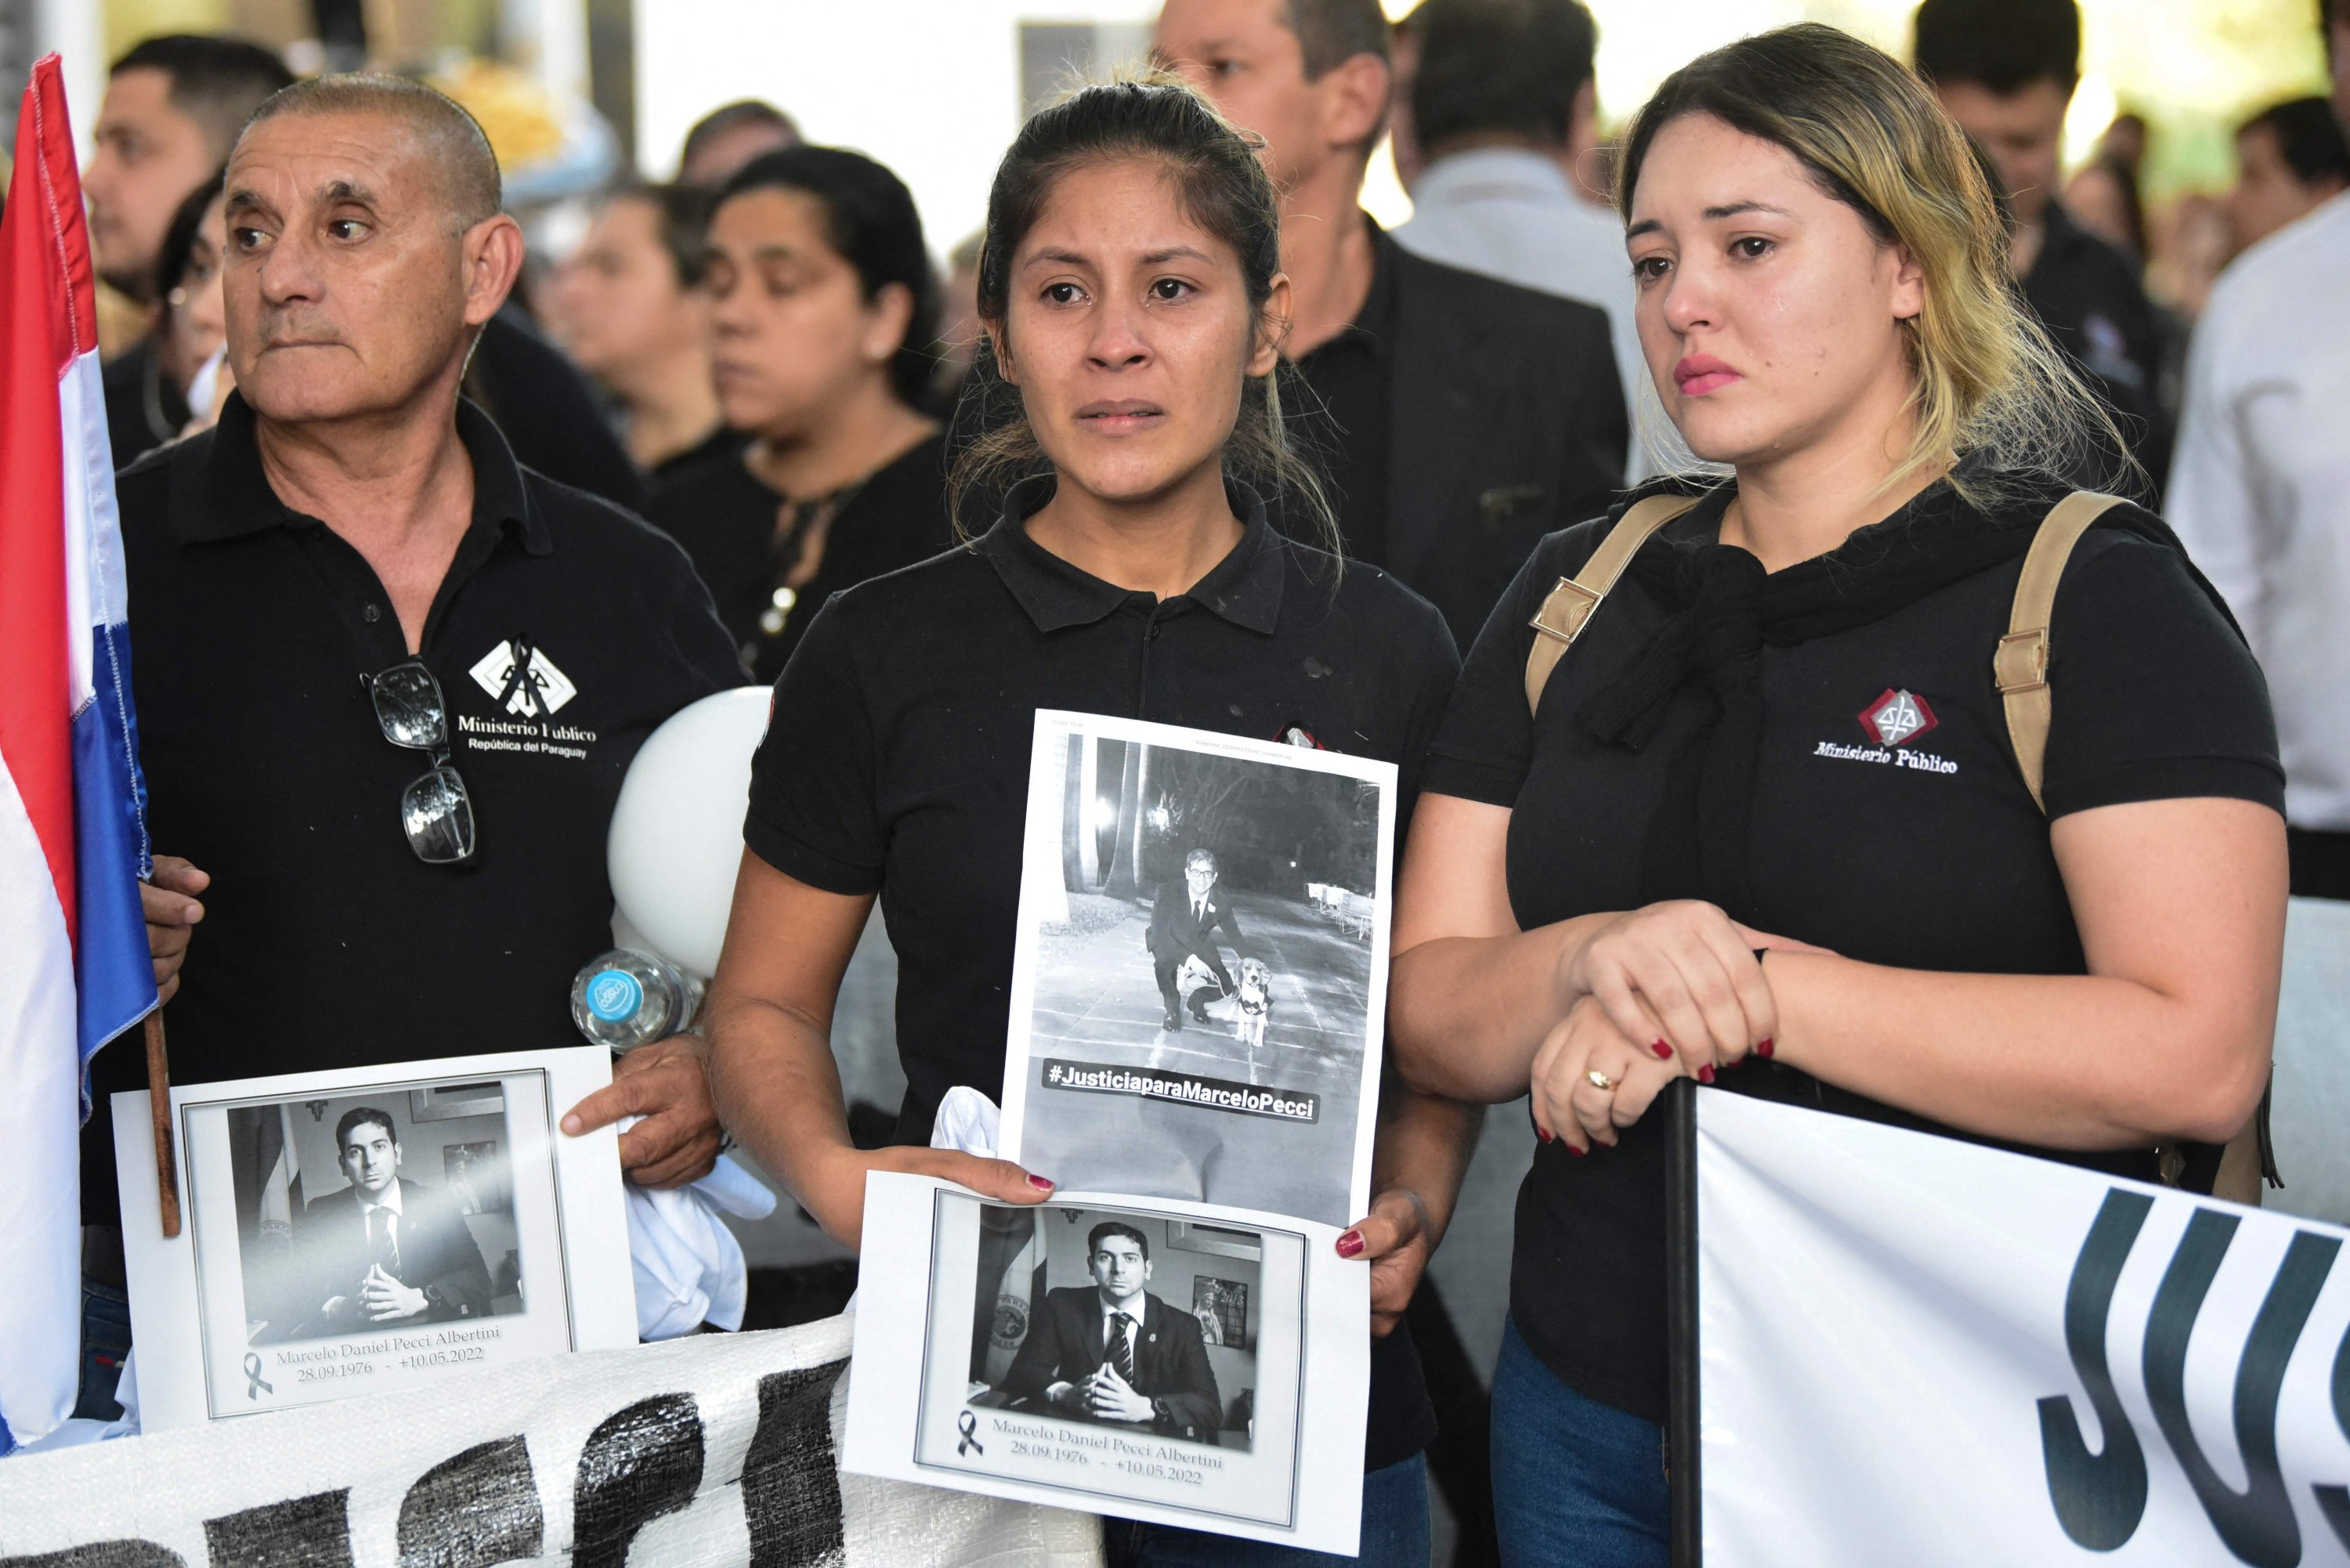 Jaksa memberikan penghormatan kepada jaksa anti-narkoba Marcelo Pecci, yang ditembak mati pada 10 Mei 2022 saat sedang berbulan madu di pulau Karibia Kolombia, selama pawai untuk menuntut keadilan atas pembunuhannya di Asuncion, Paraguay, 13 Mei 2022. ( Foto AFP)